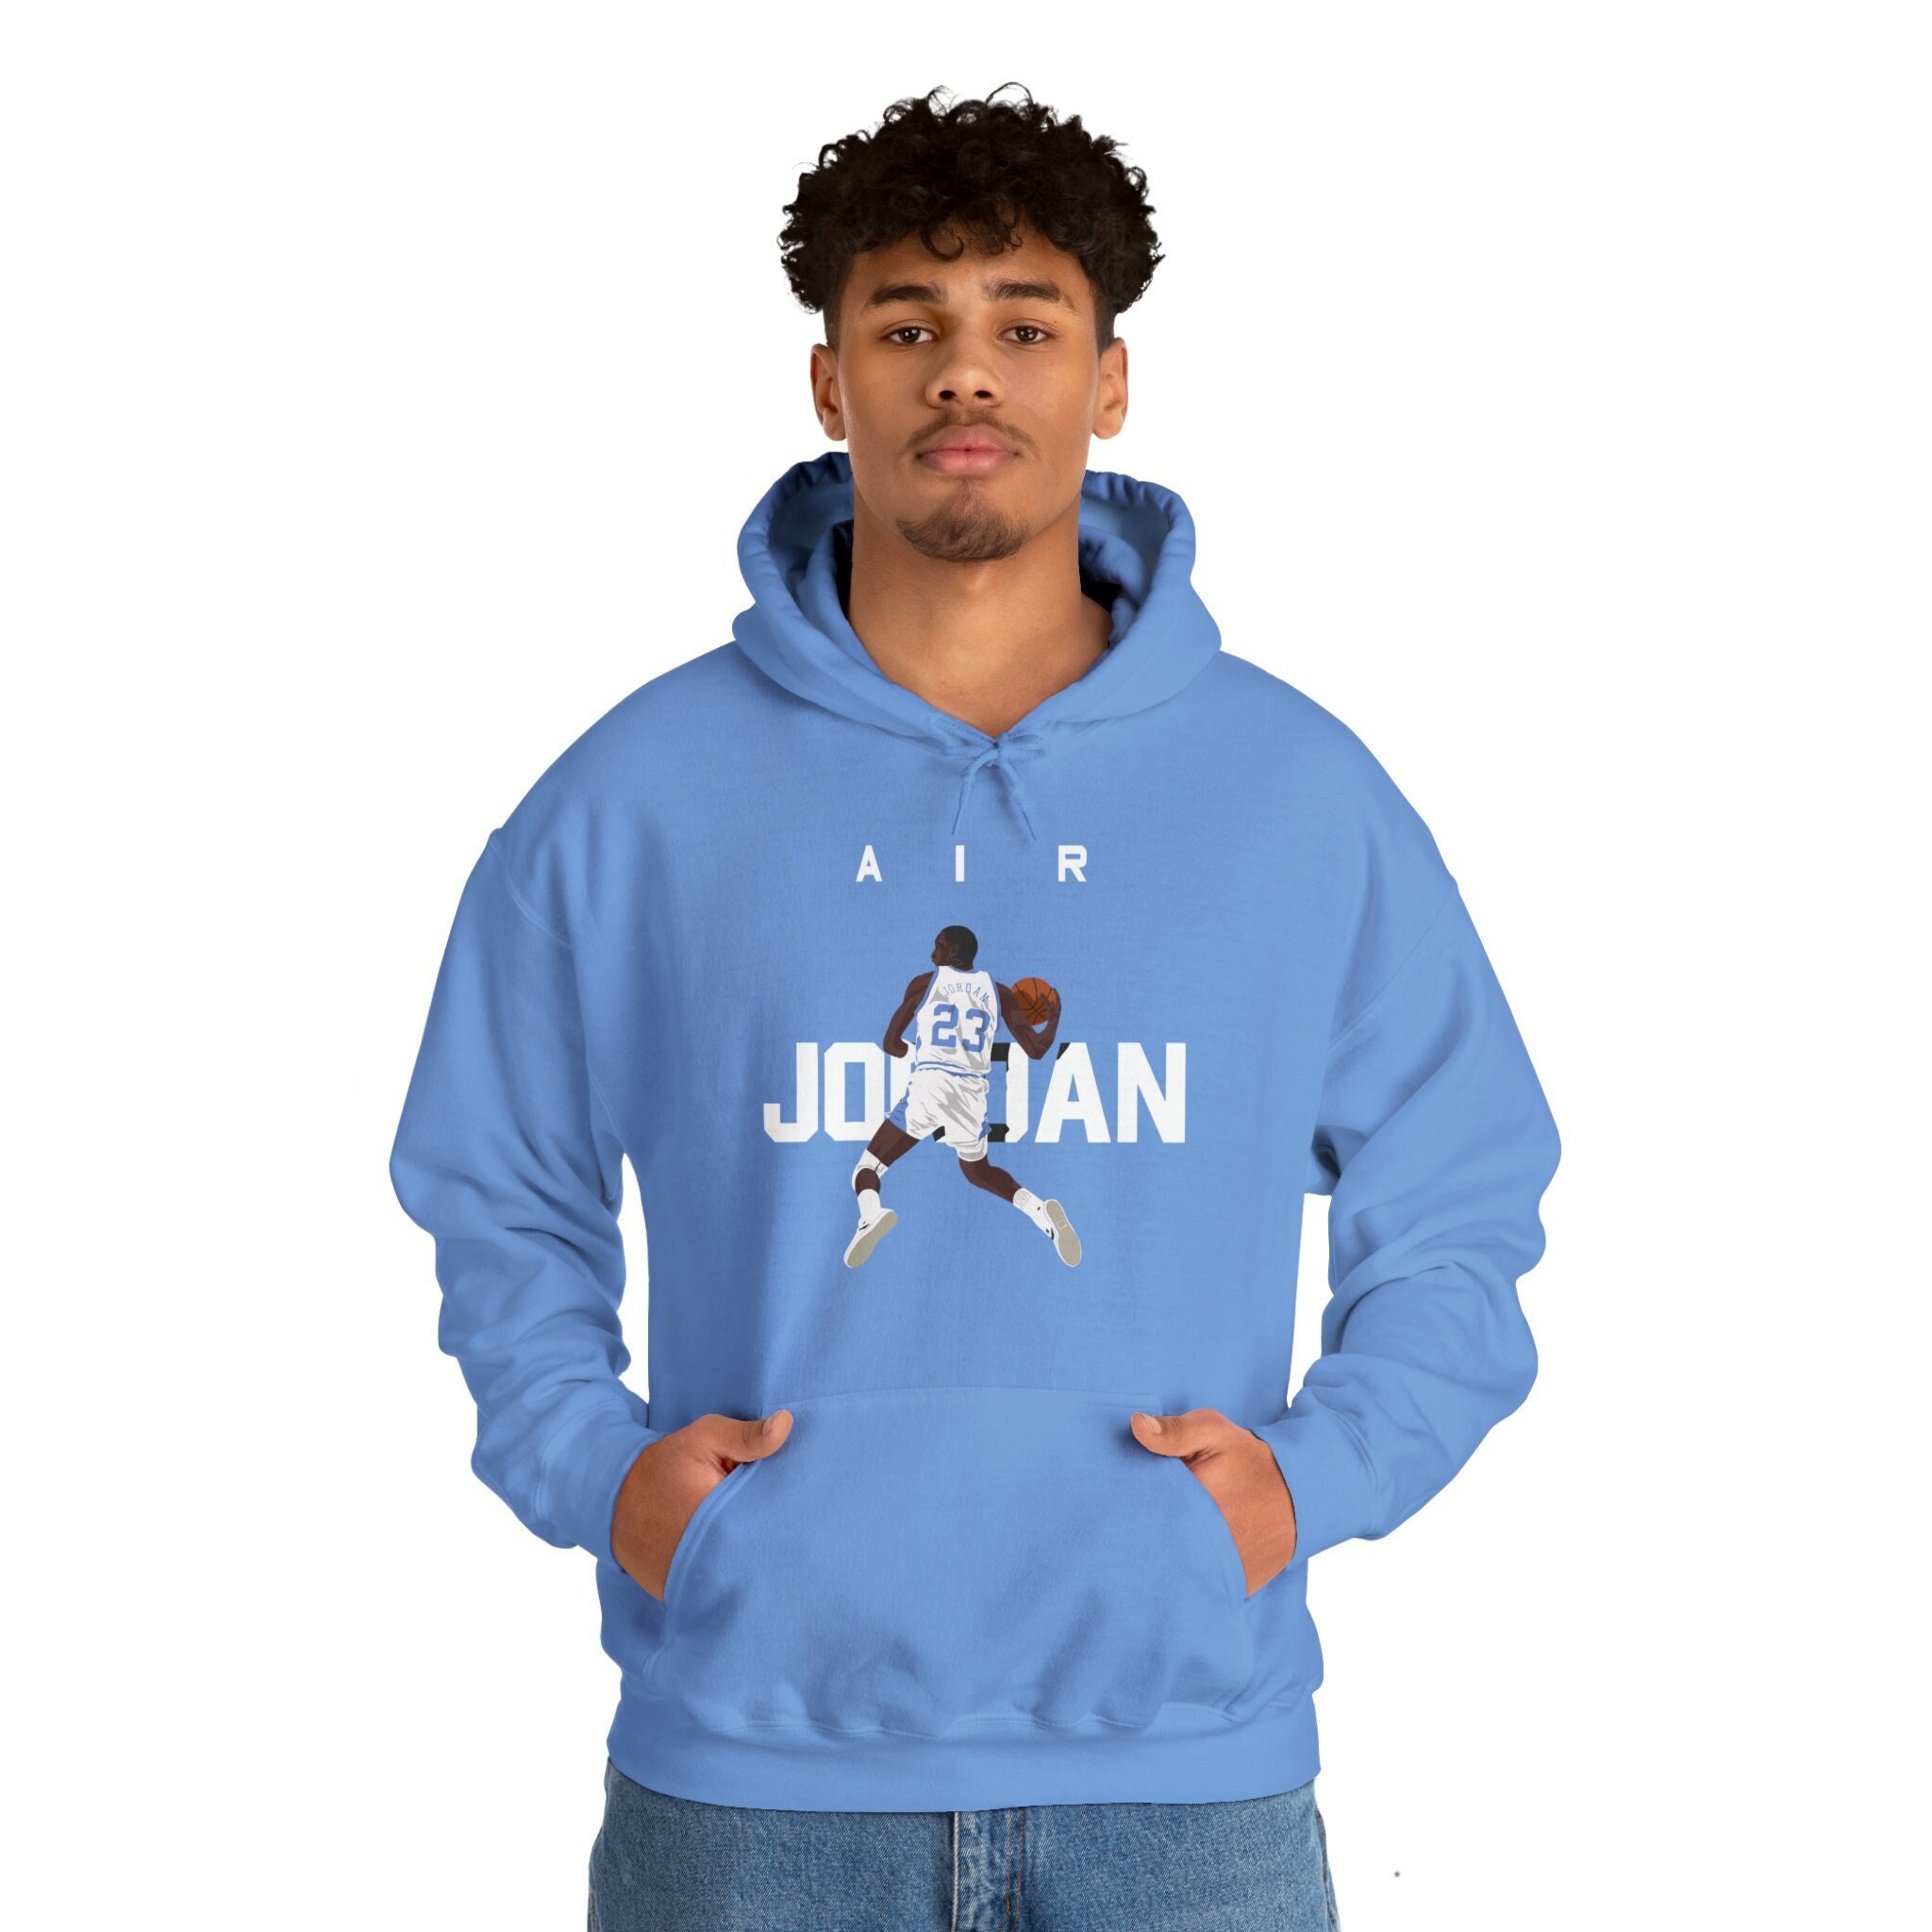 North 23 Carolina Michael Jordan Graphic T-shirts, hoodie, sweater